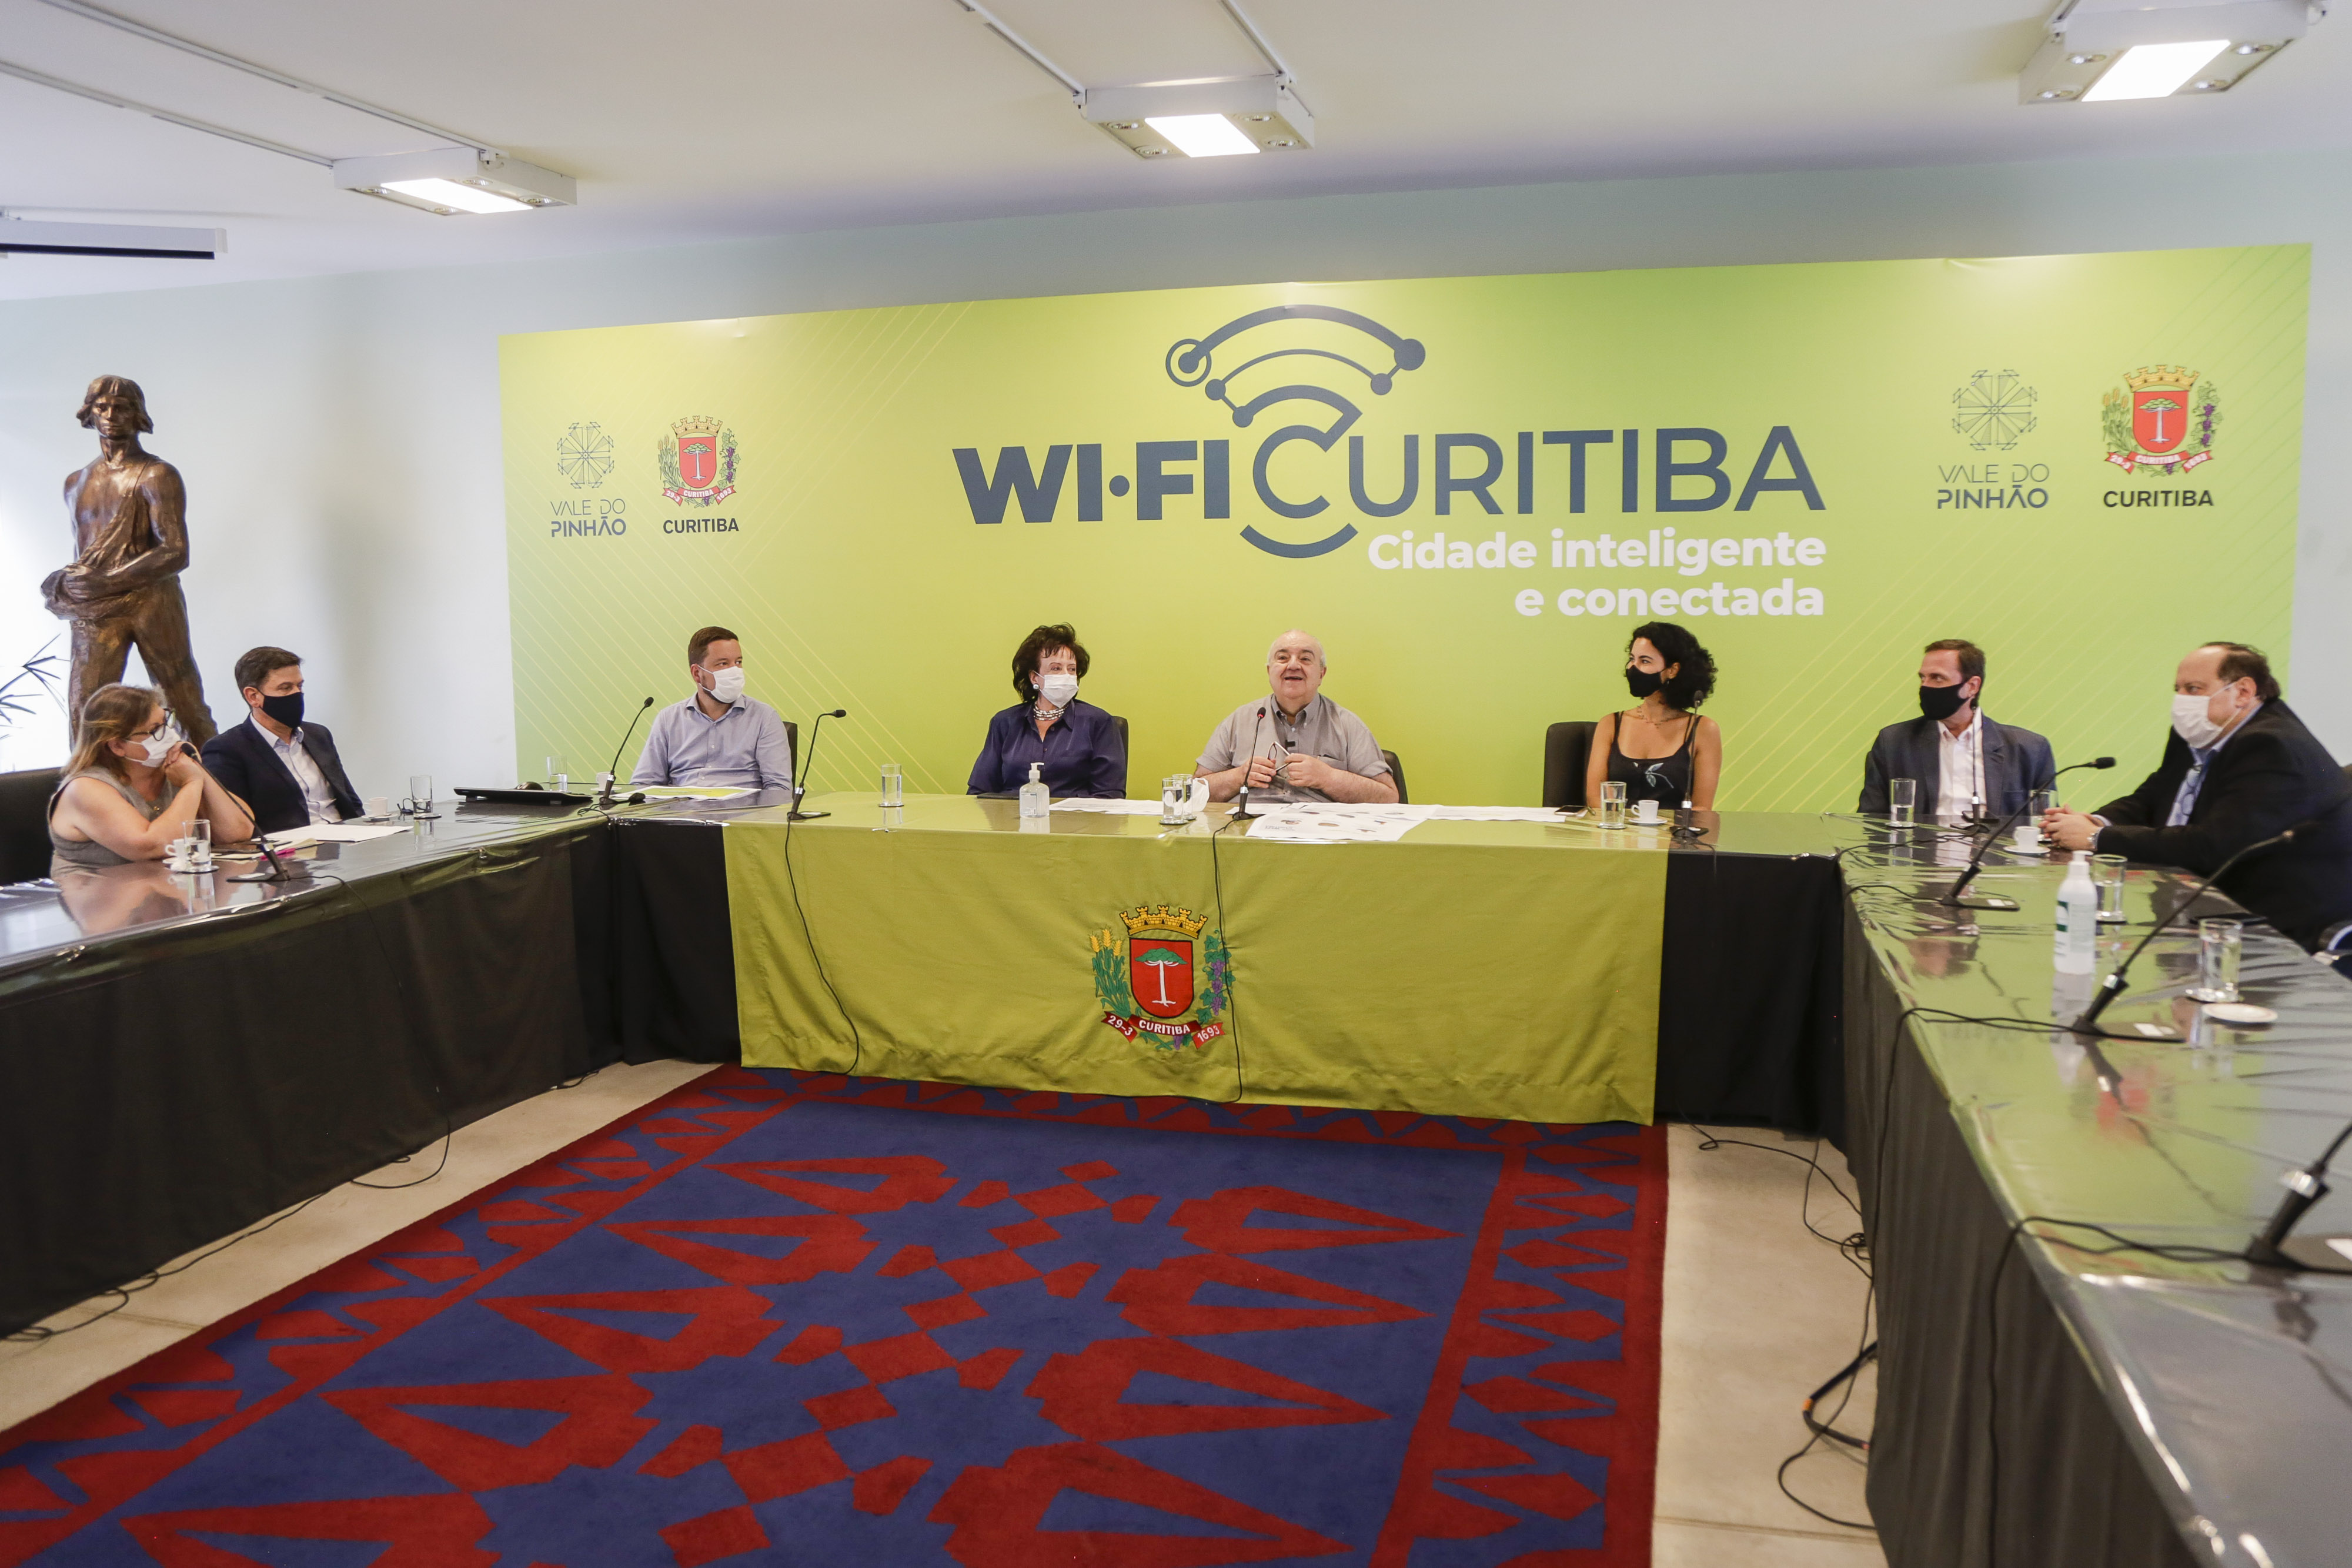 wi-fi curitiba